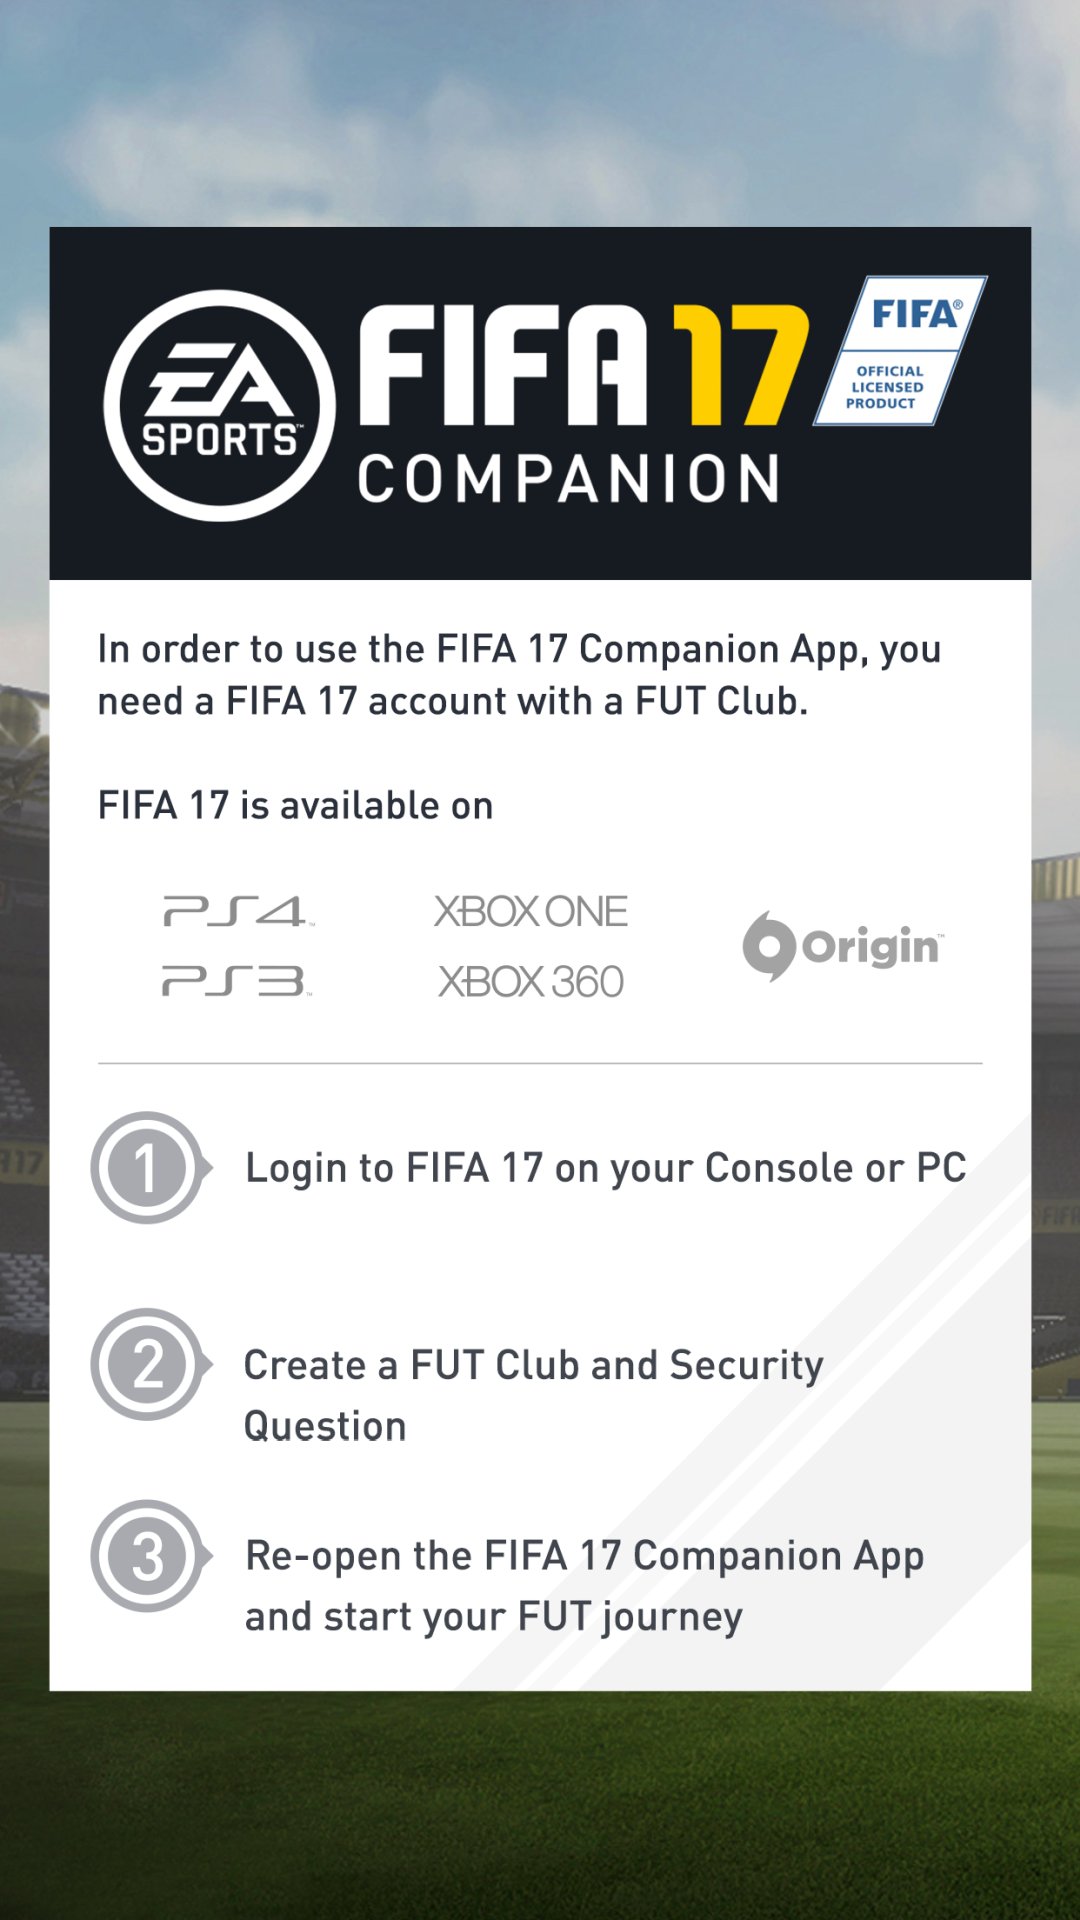 EA SPORTS FIFA 23 Companion APK- Download